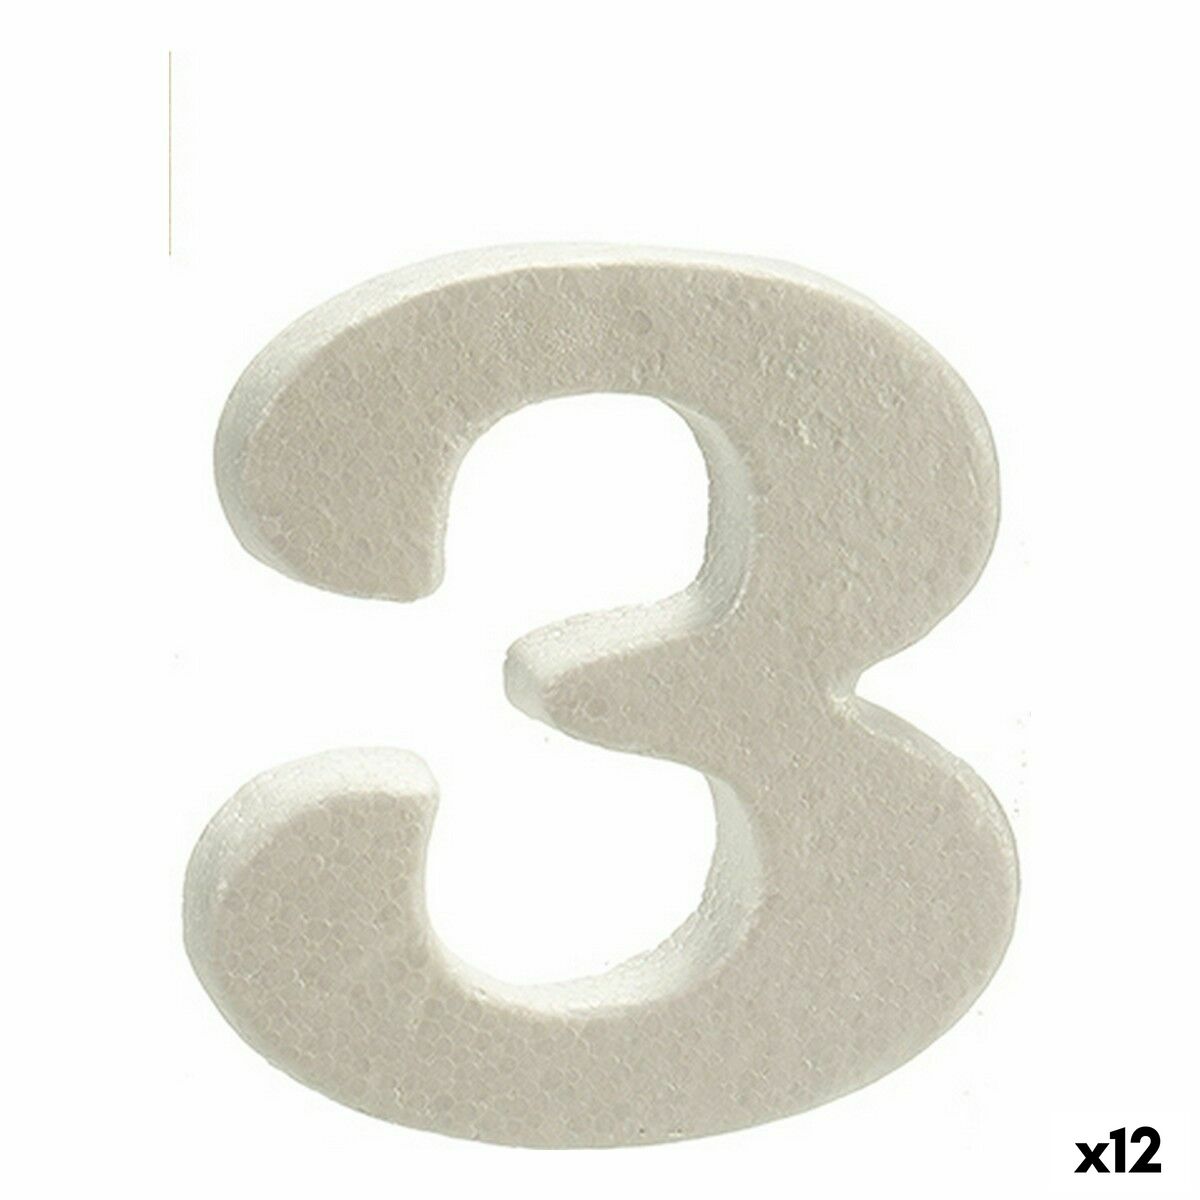 Numeri 3 Bianco polistirene 2 x 15 x 10 cm (12 Unità)